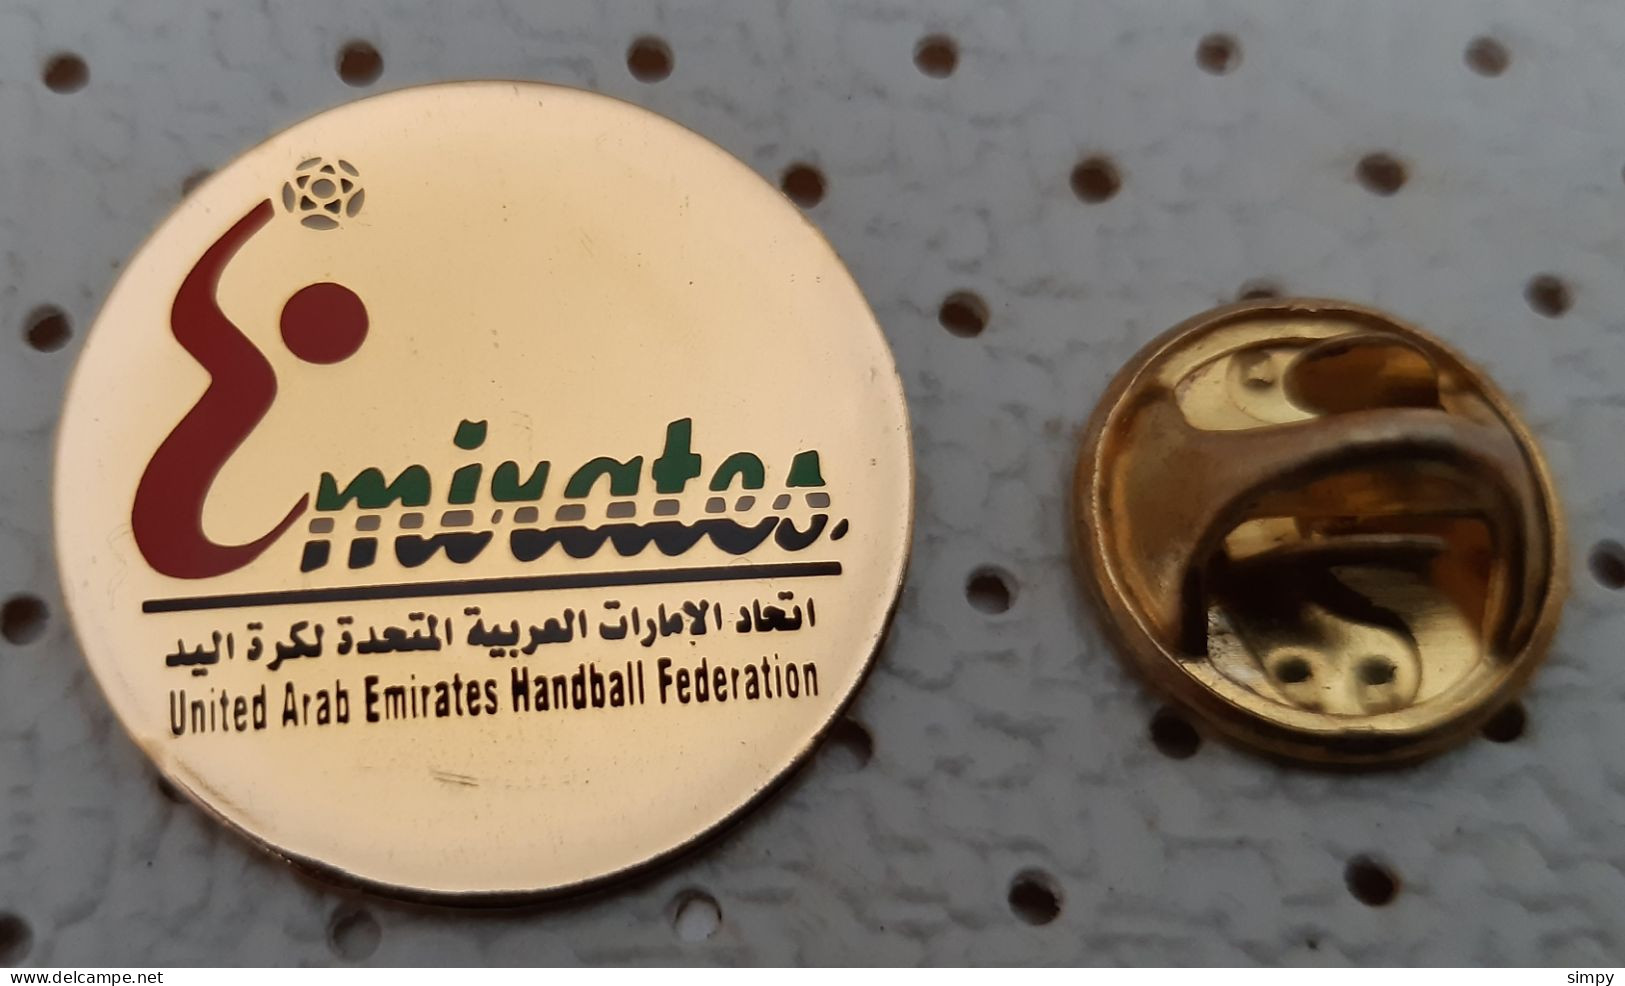 United Arab Emirates Handball Federation Pin Badge - Handball